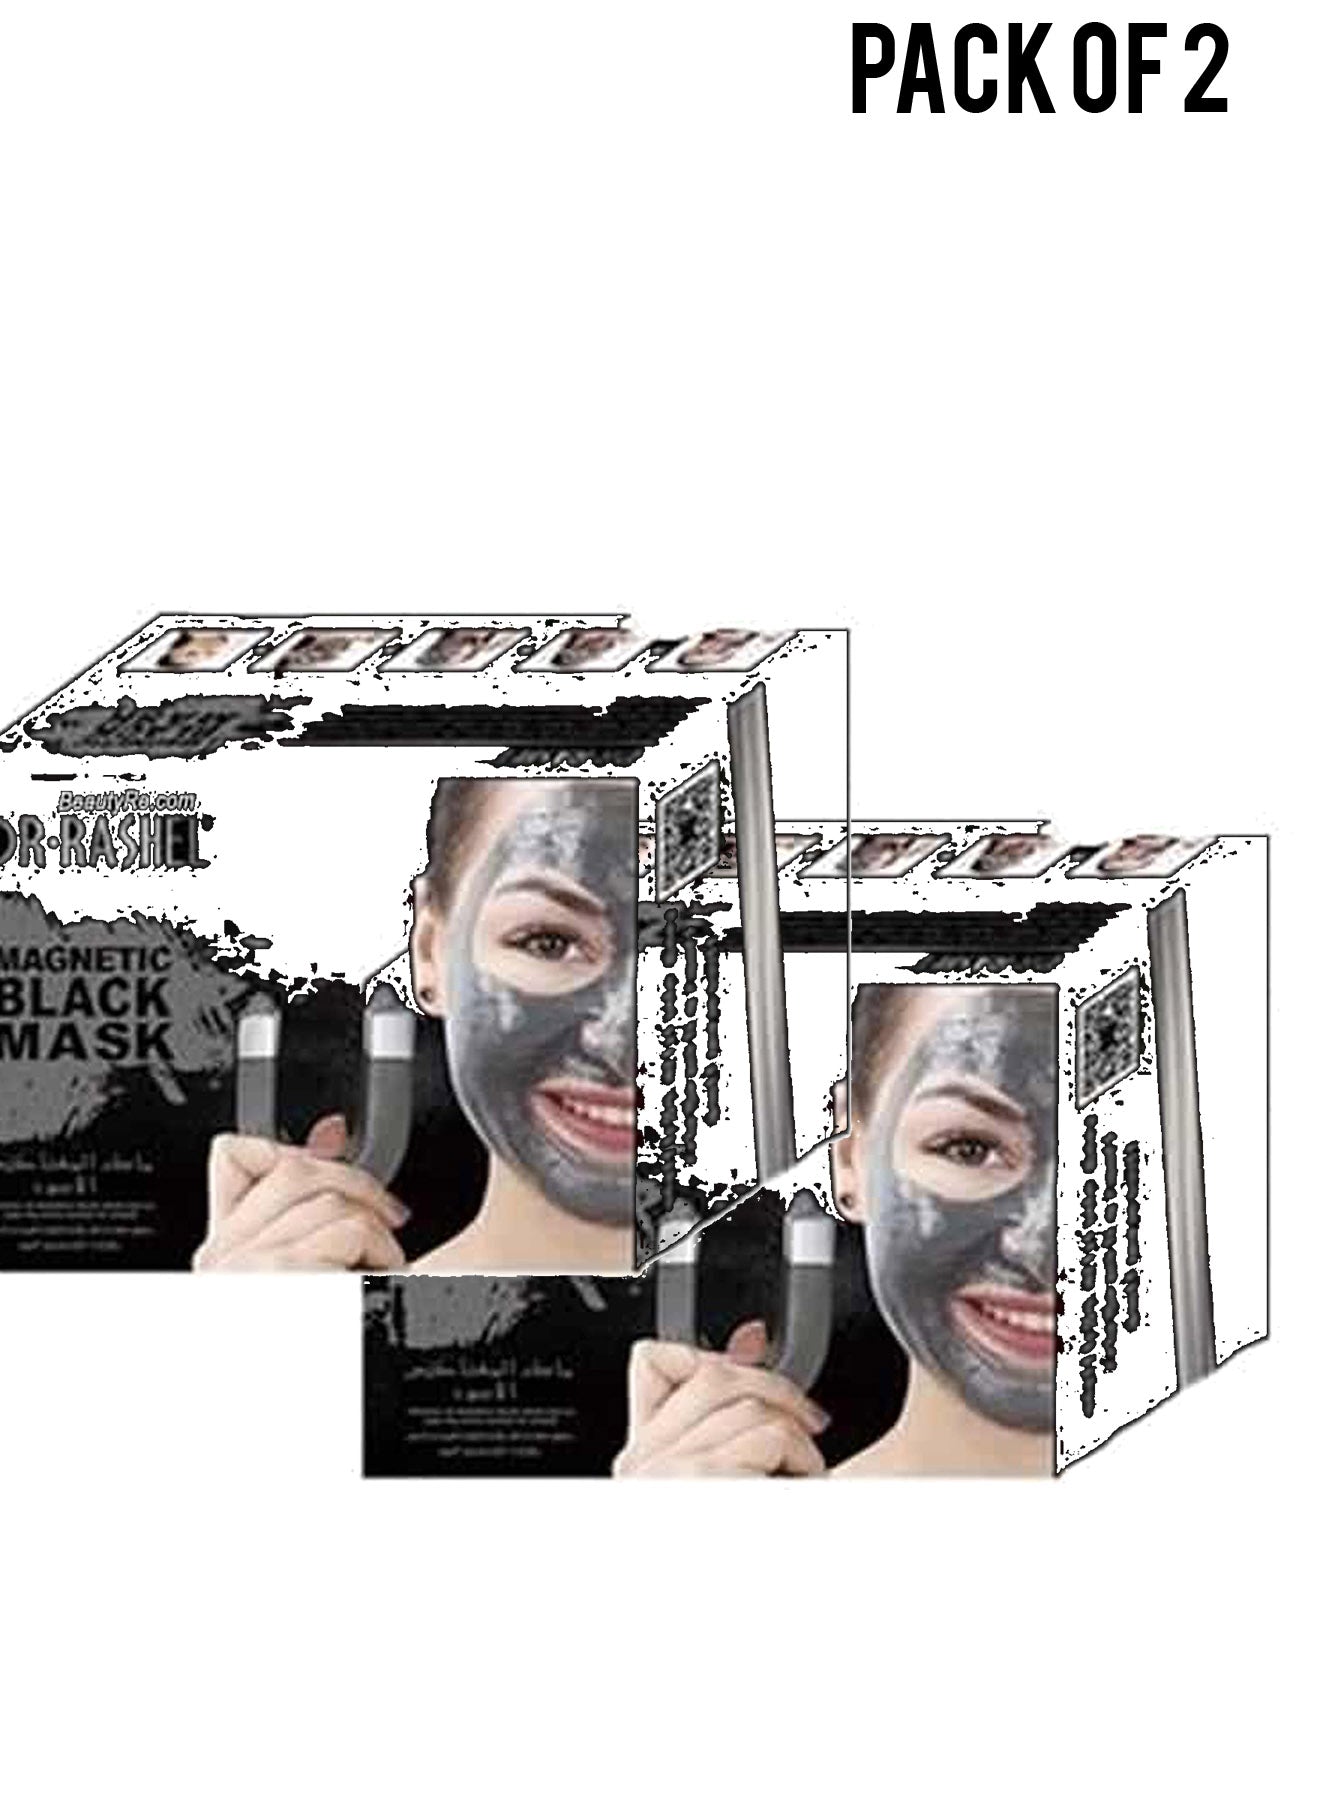 Dr Rashel Magnetic Black Mask 80g Value Pack of 2 